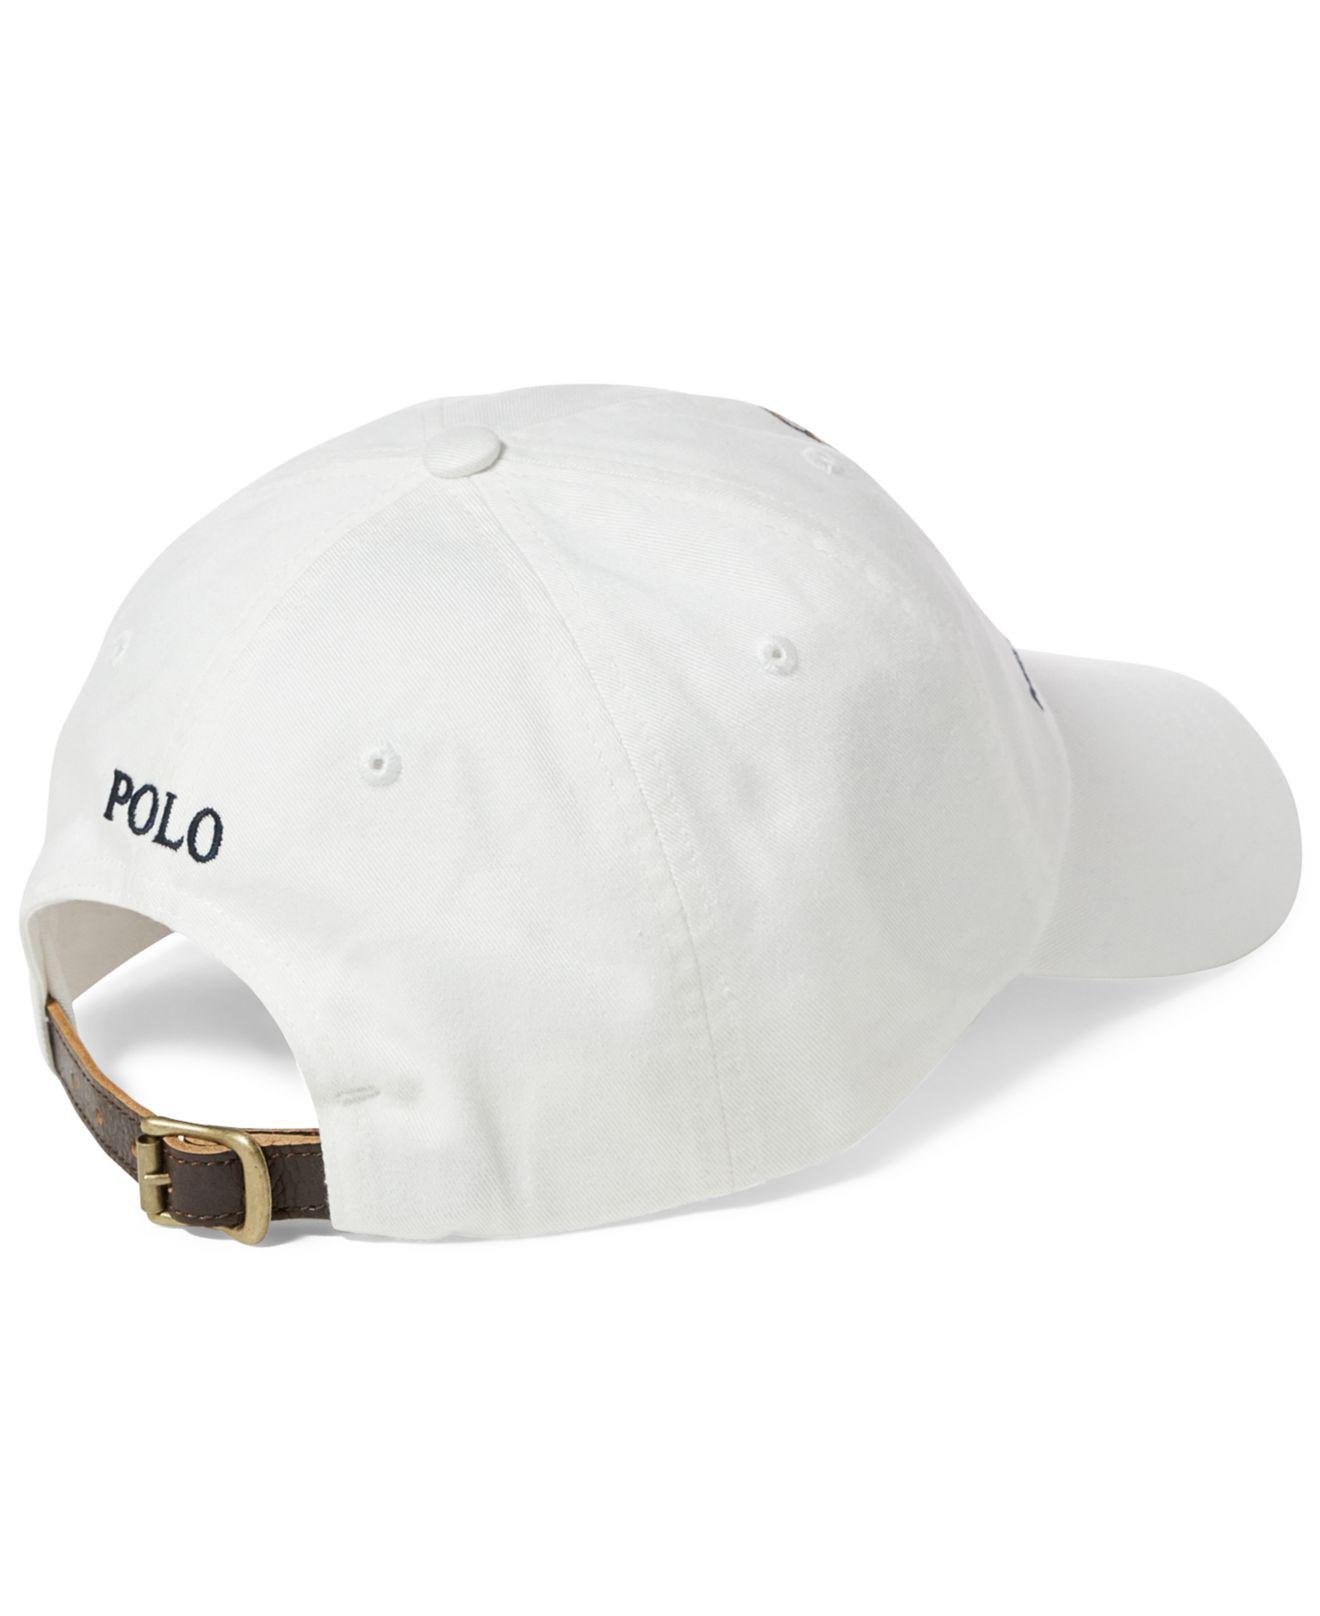 polo bear hat